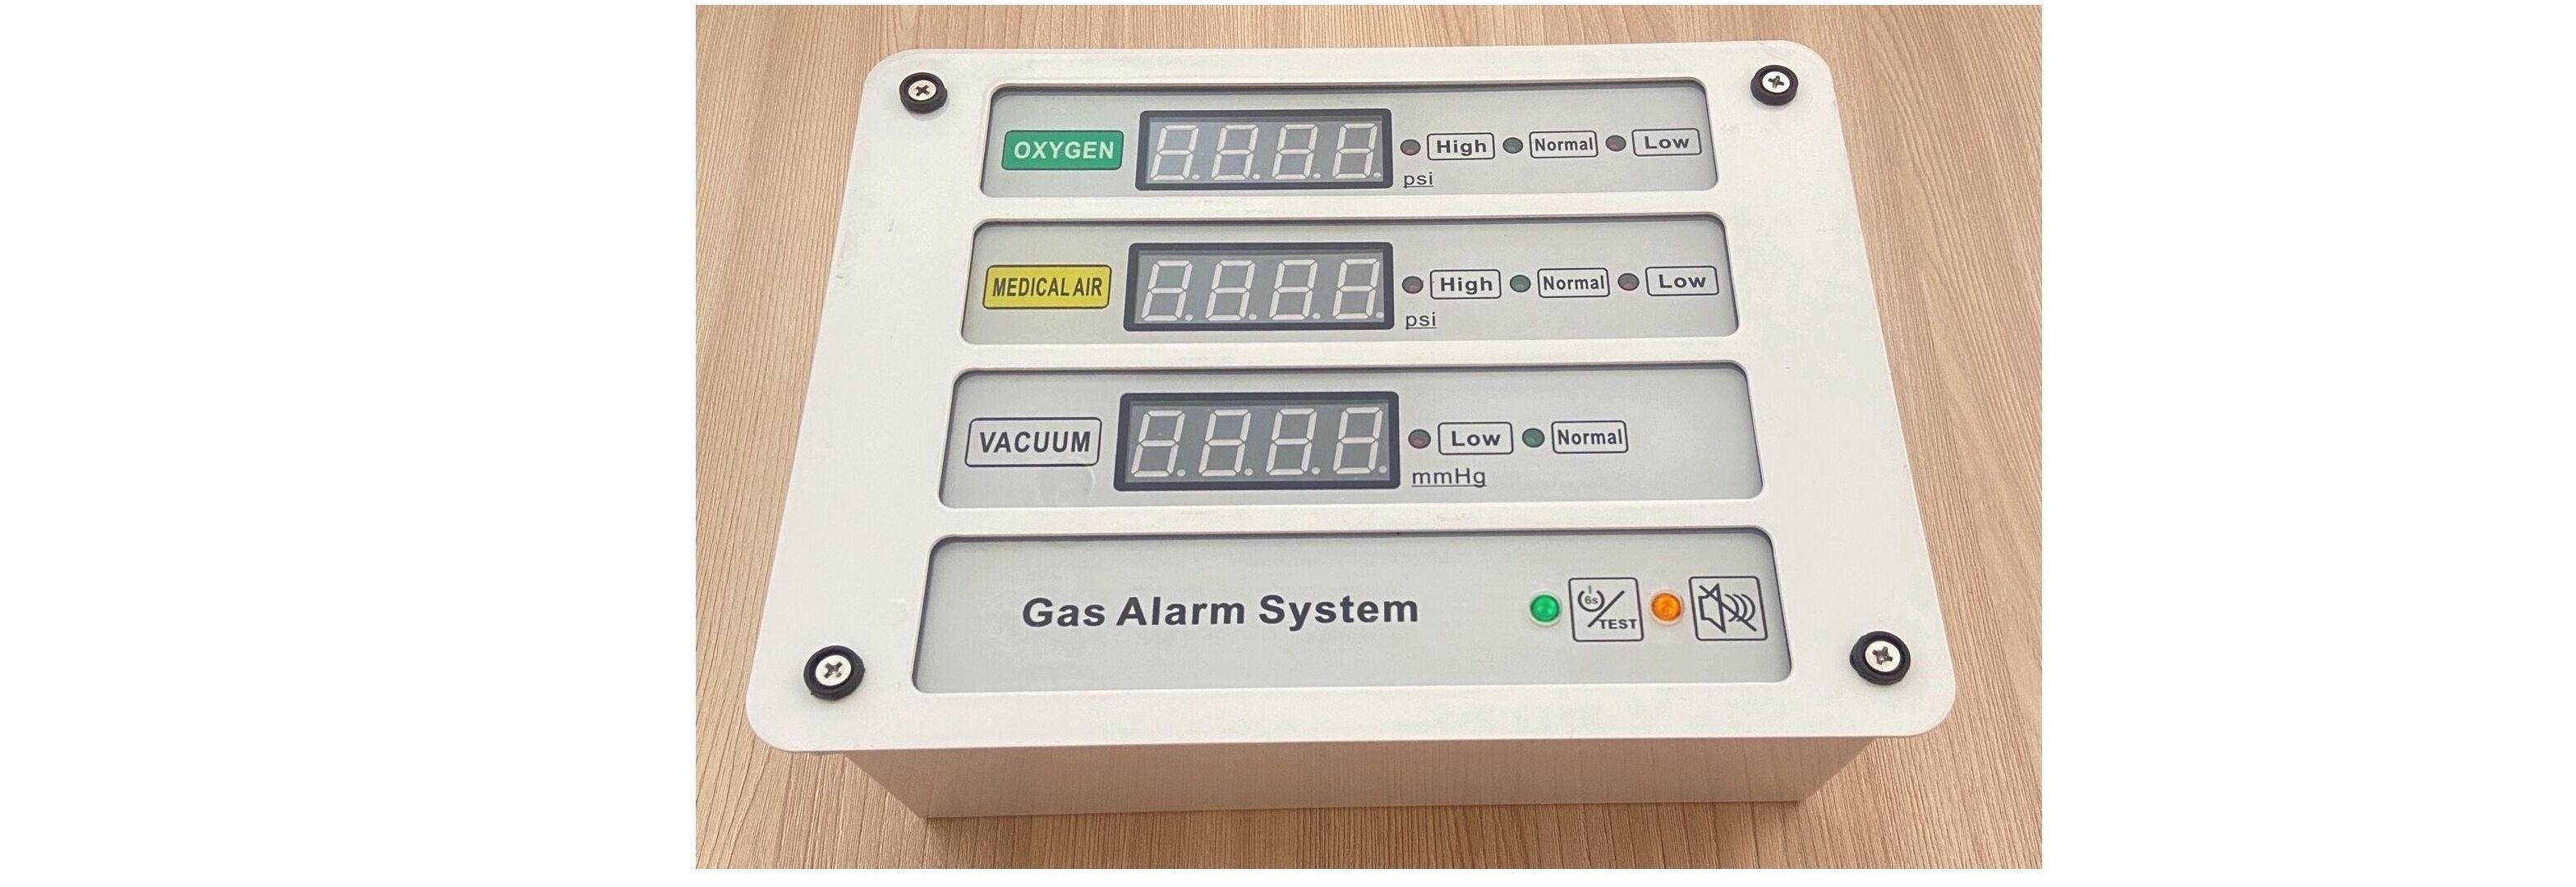 Medical Digital Gas Alarm Unit for Hospital pipeline_เครื่องสัญญาณเตือนแรงดันในระบบท่อก๊าซการแพทย์โร